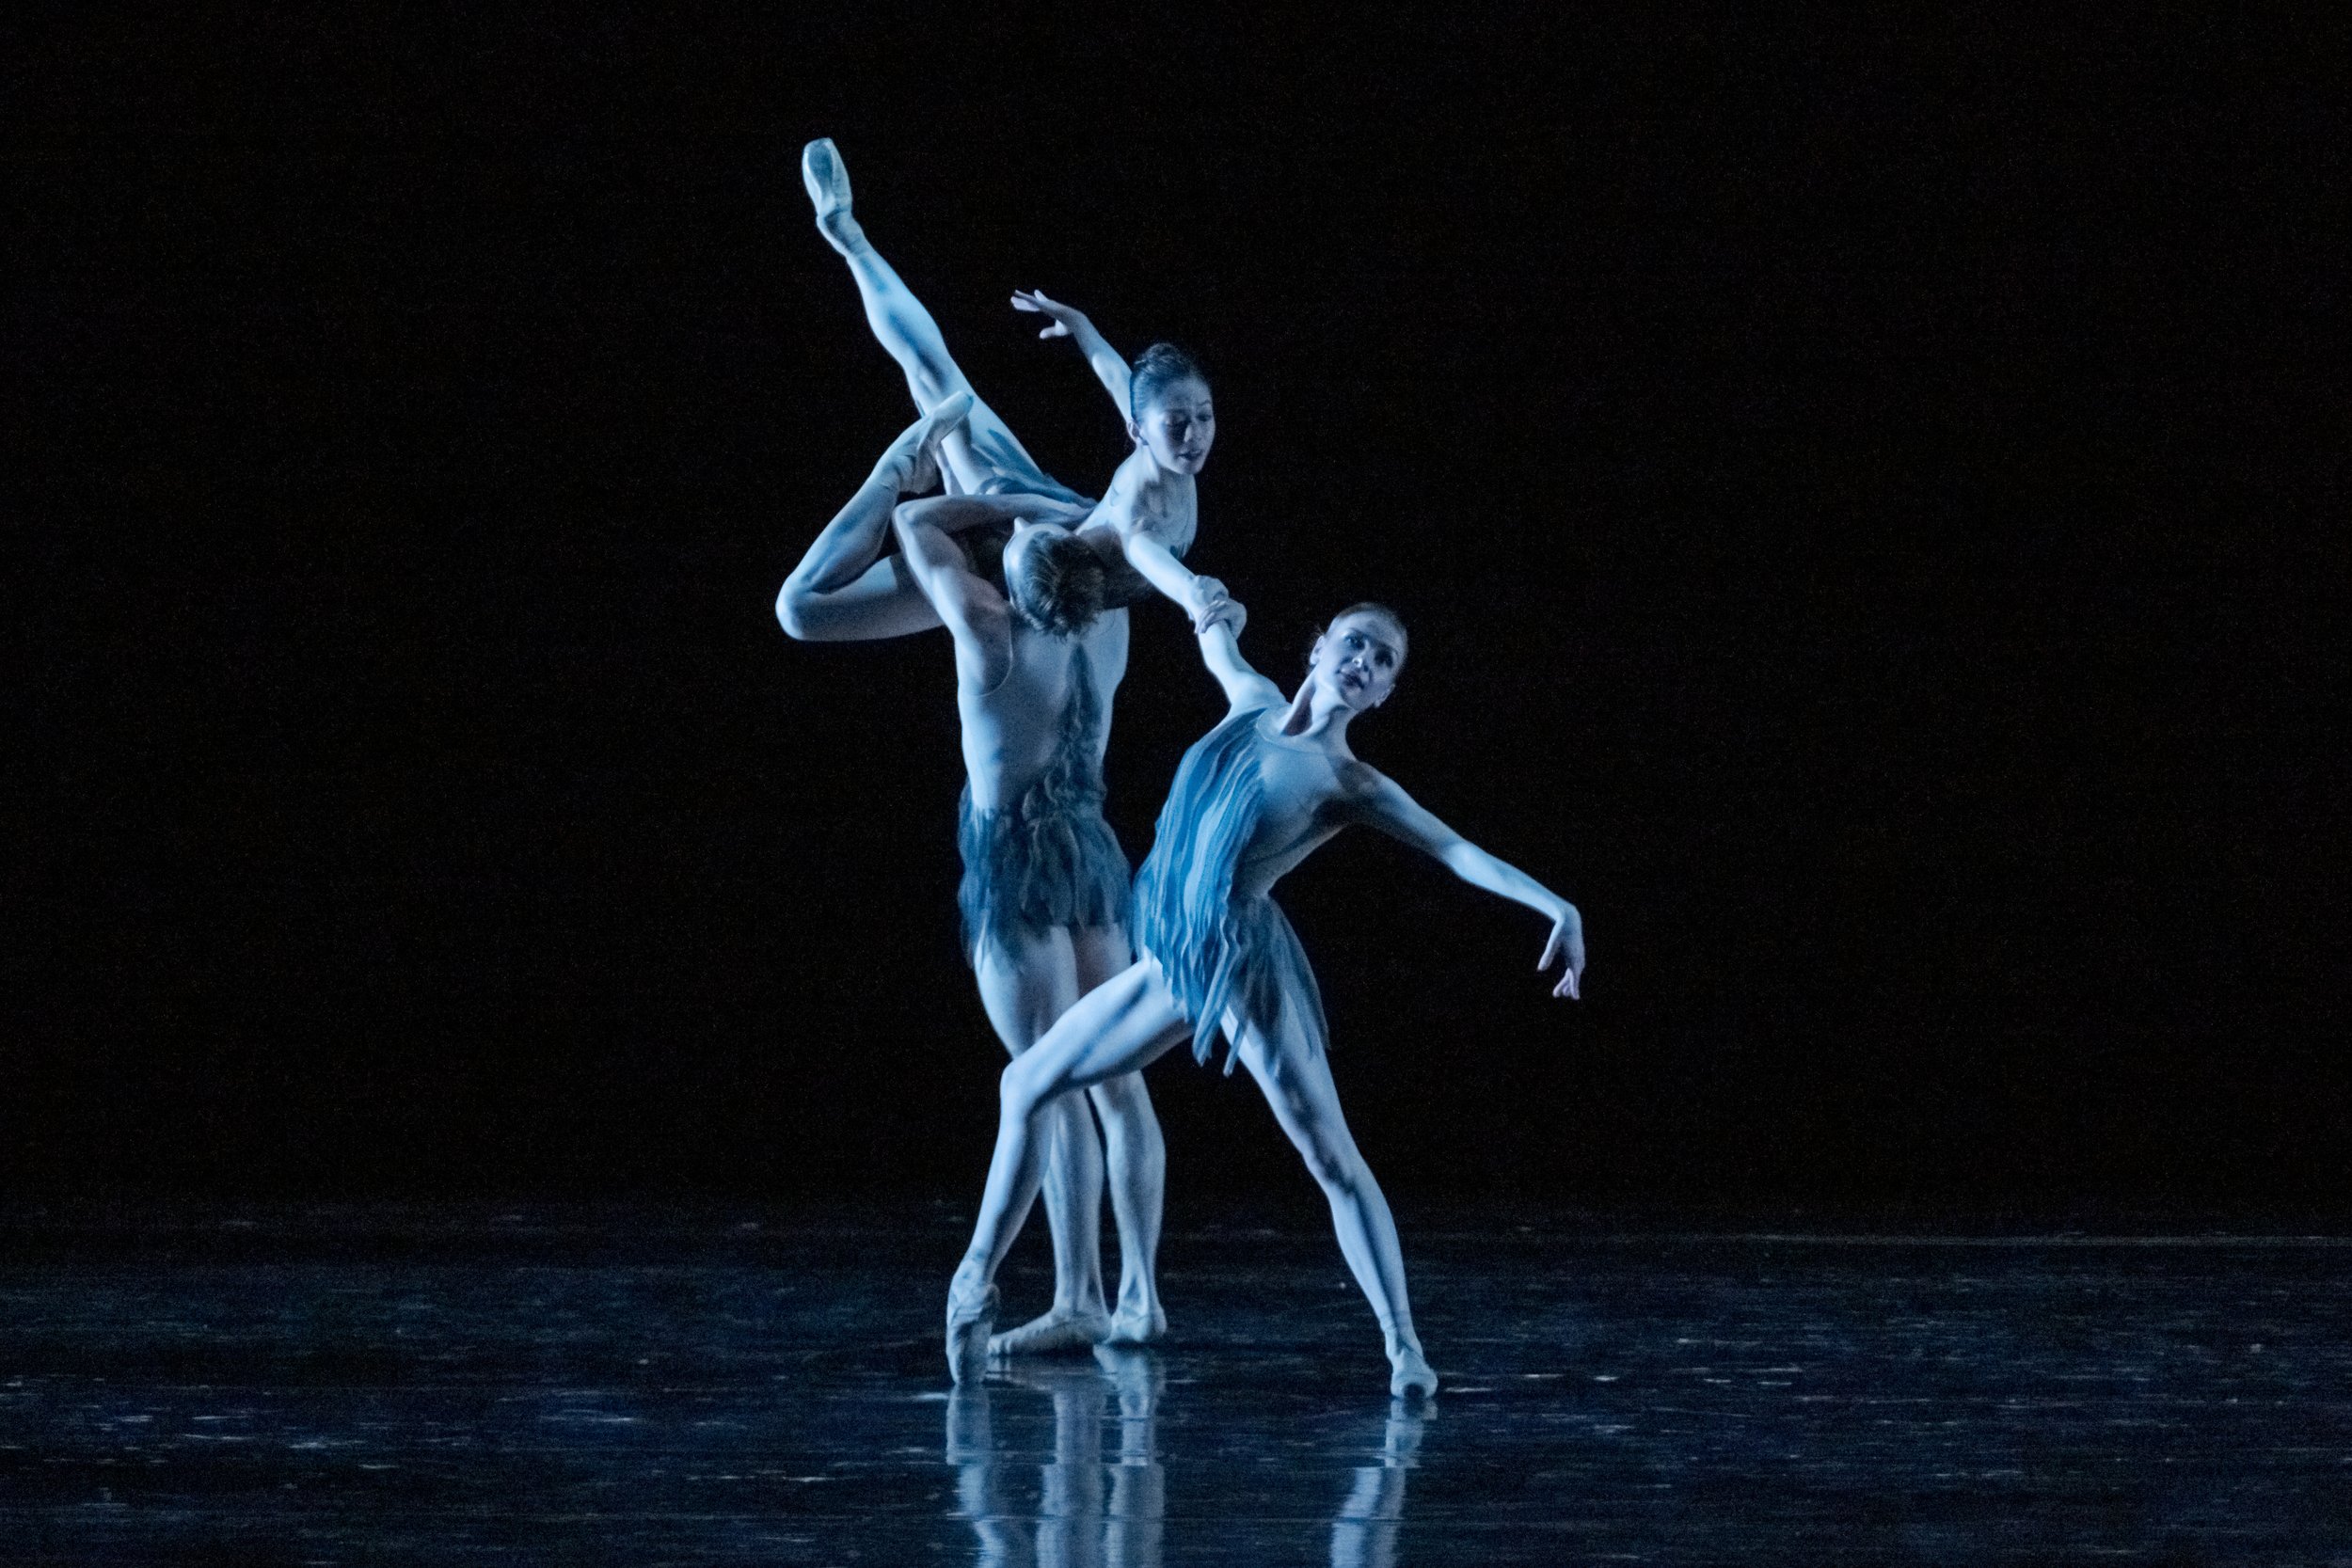  Hannah Galway, Tirion Law and Noah Parets in Skyward. Photo by Karolina Kuras, courtesy of The National Ballet of Canada. 